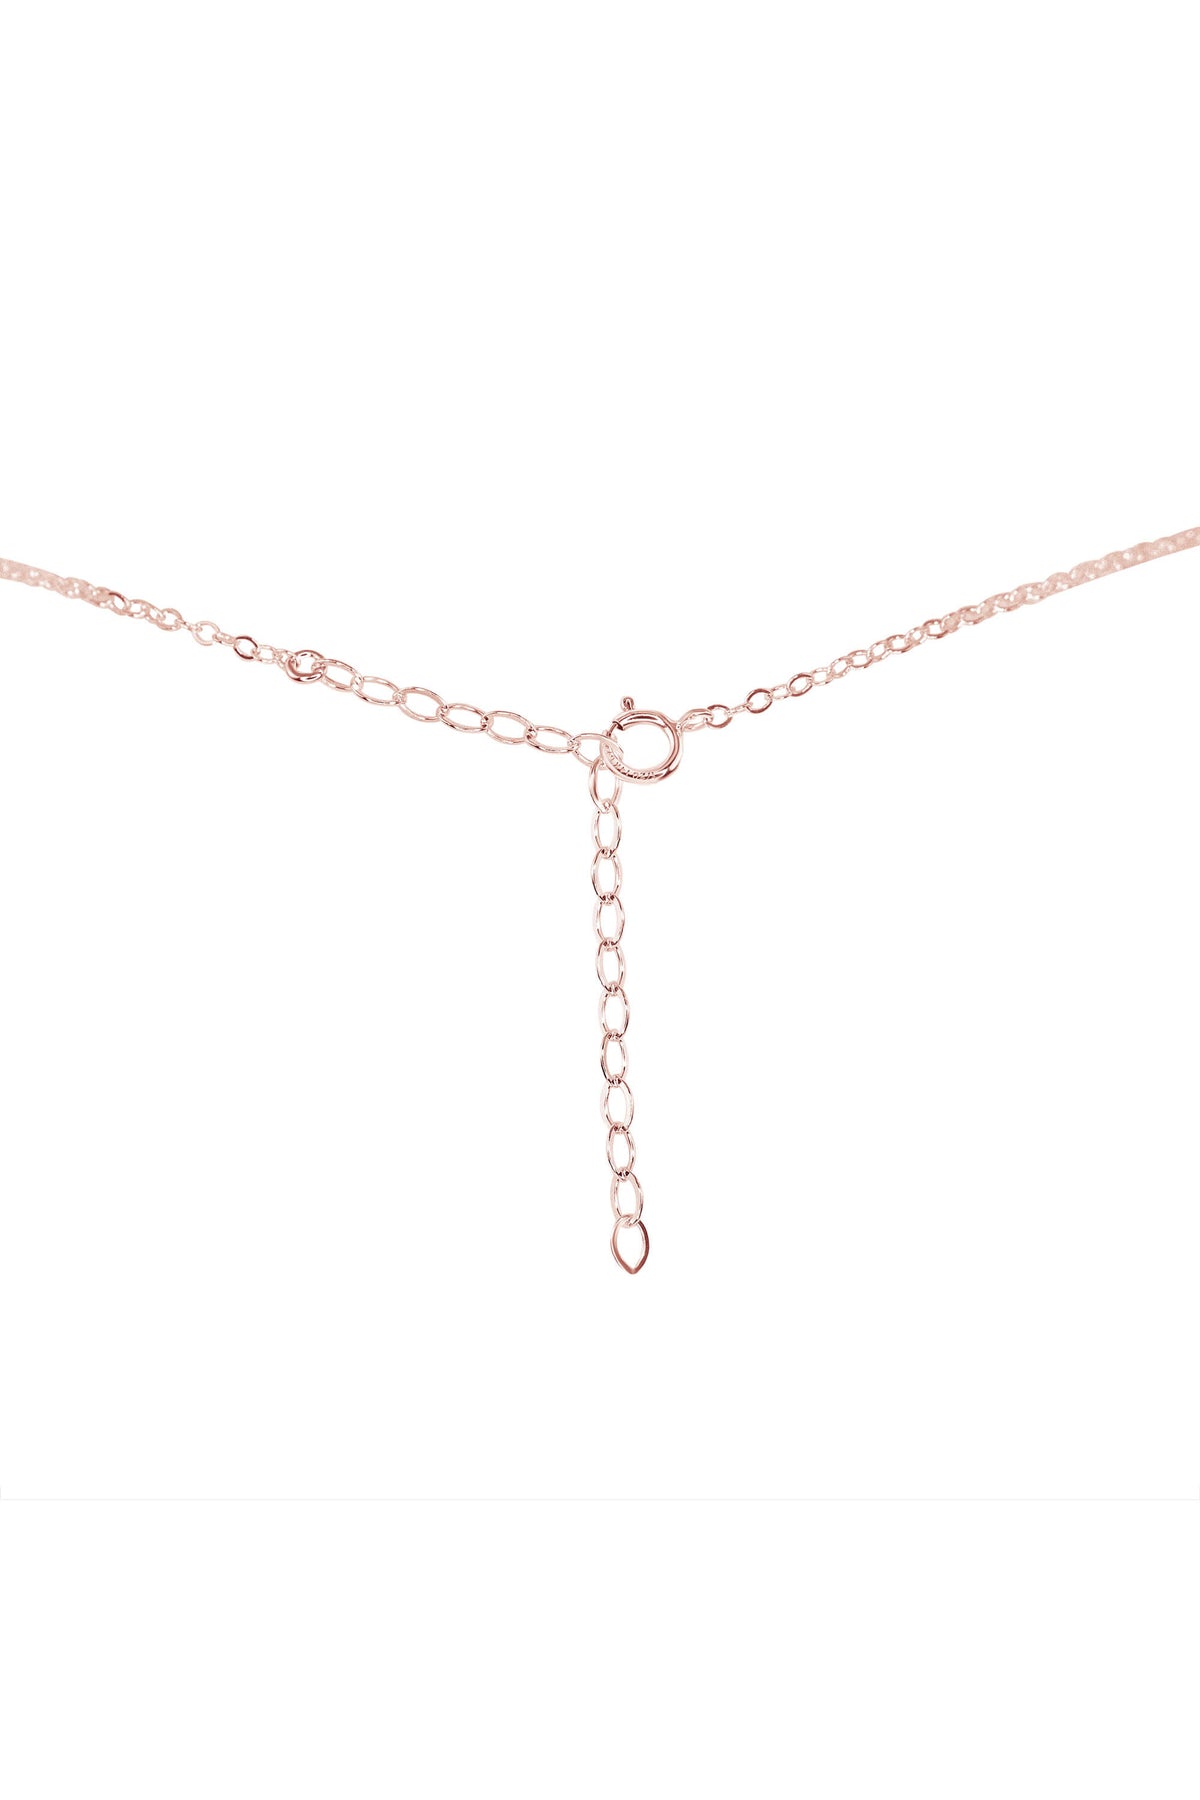 Raw Nugget Choker - Freshwater Pearl - 14K Rose Gold Fill - Luna Tide Handmade Jewellery